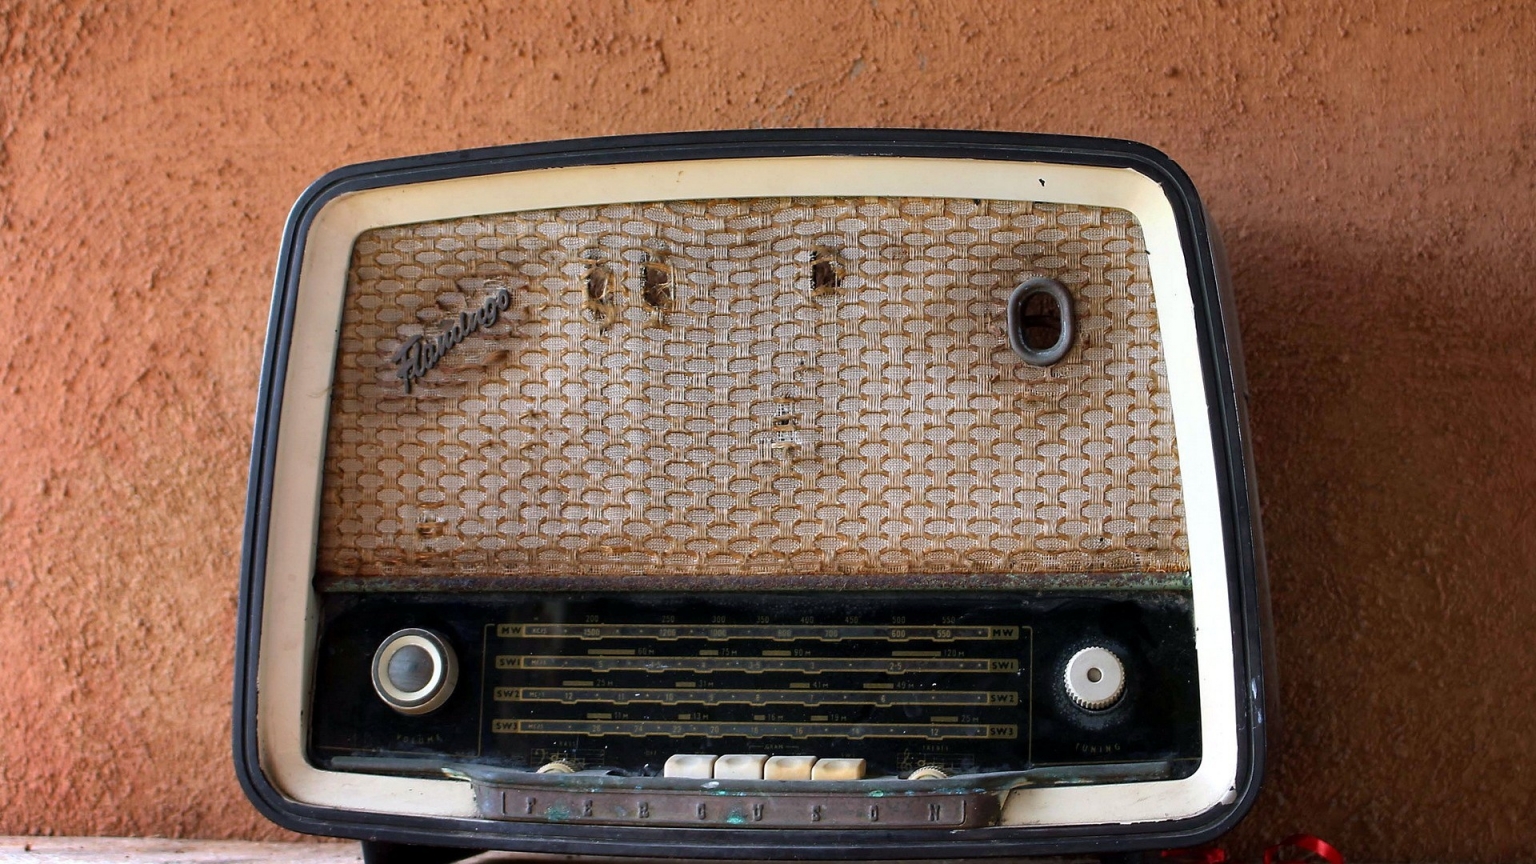 Vintage Radio Station for 1536 x 864 HDTV resolution